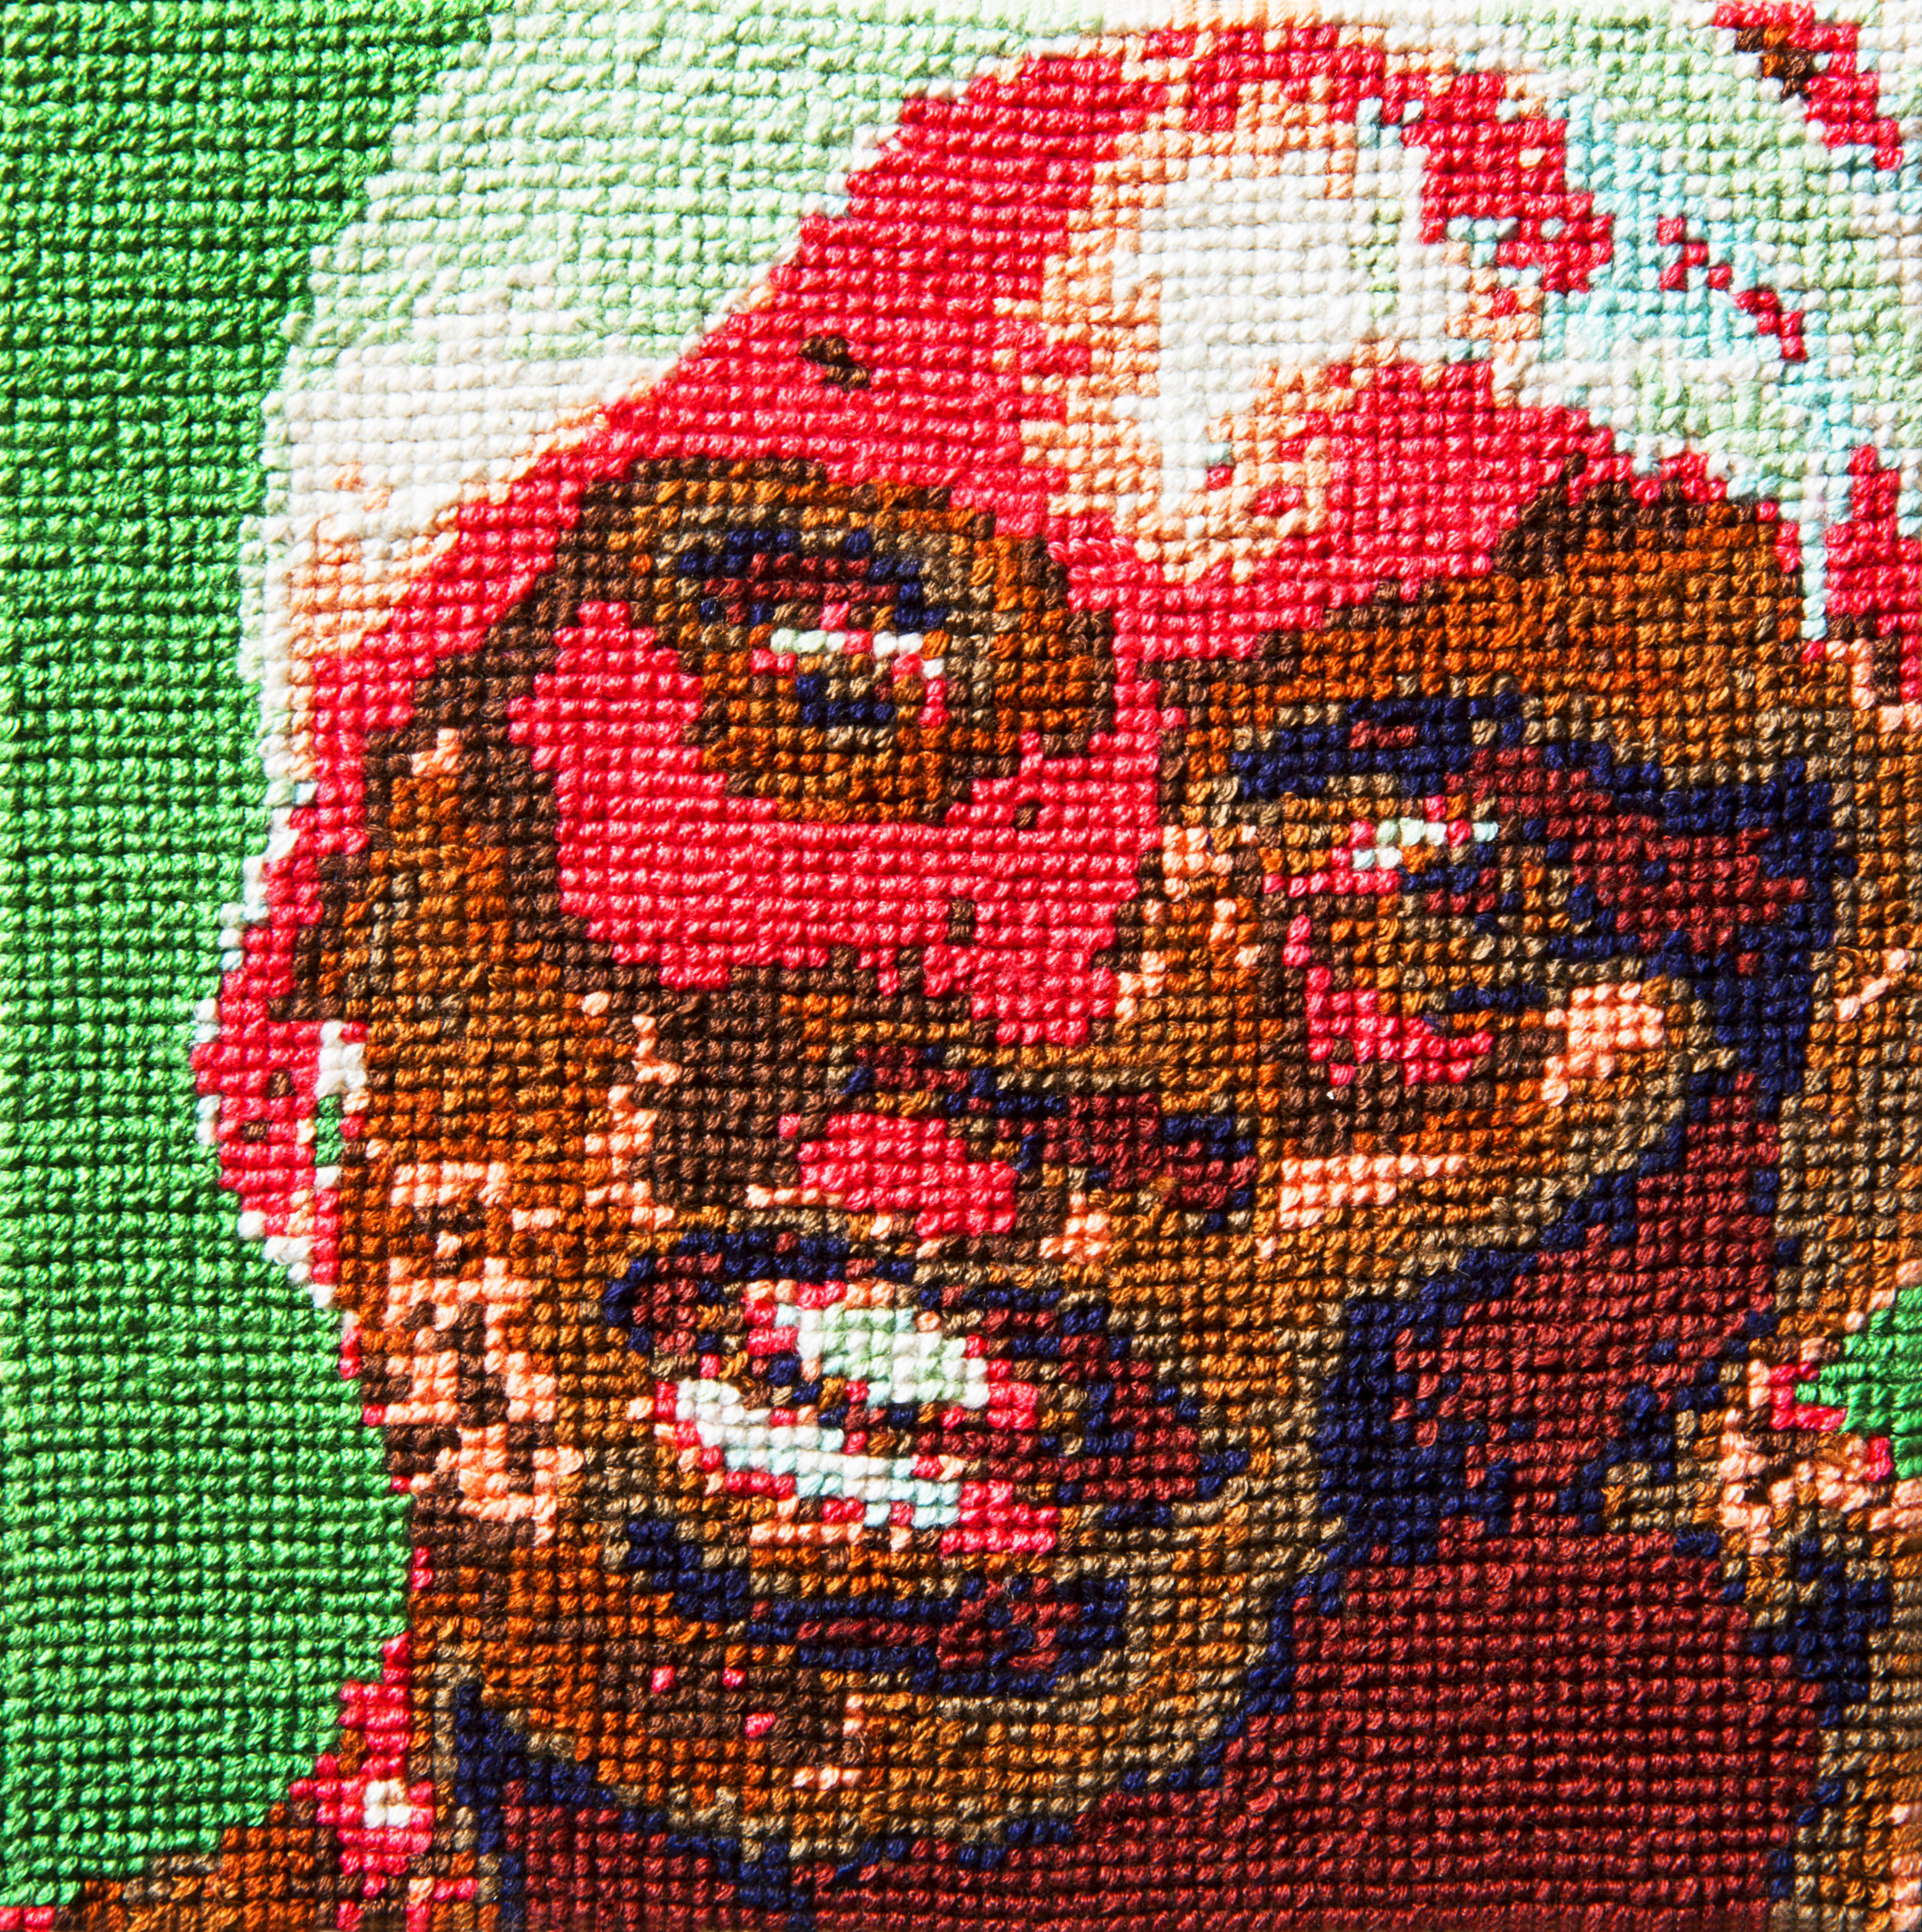   Frame 35   By Drew Watts  5 x 5 inches  Cotton thread on aida cloth  2013 